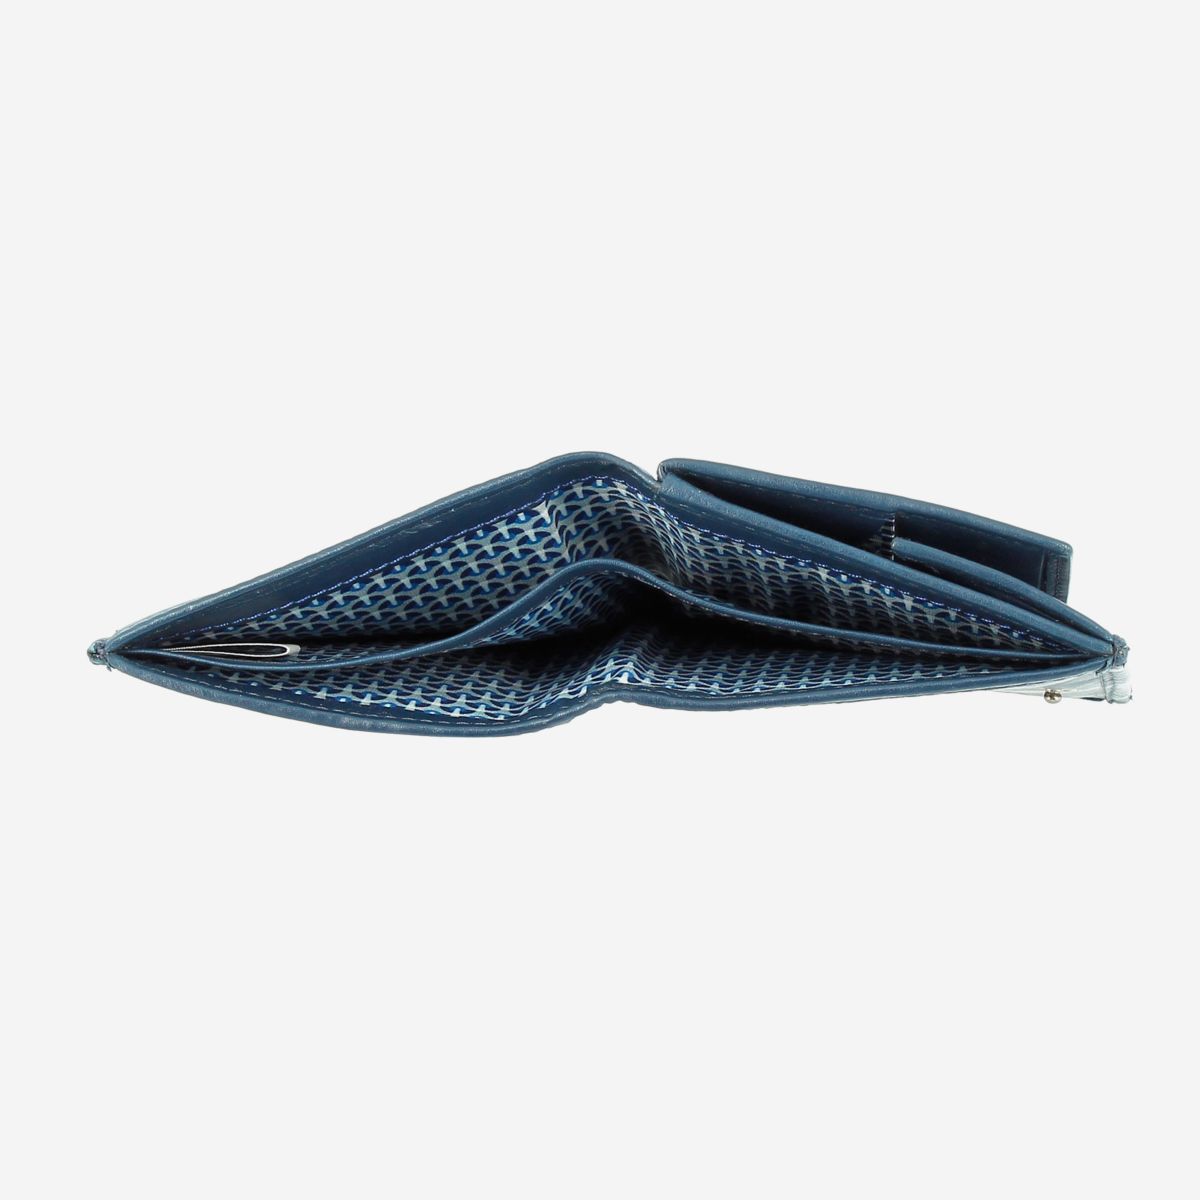 NUVOLA PELLE Small Unique Leather Wallet  - Blue